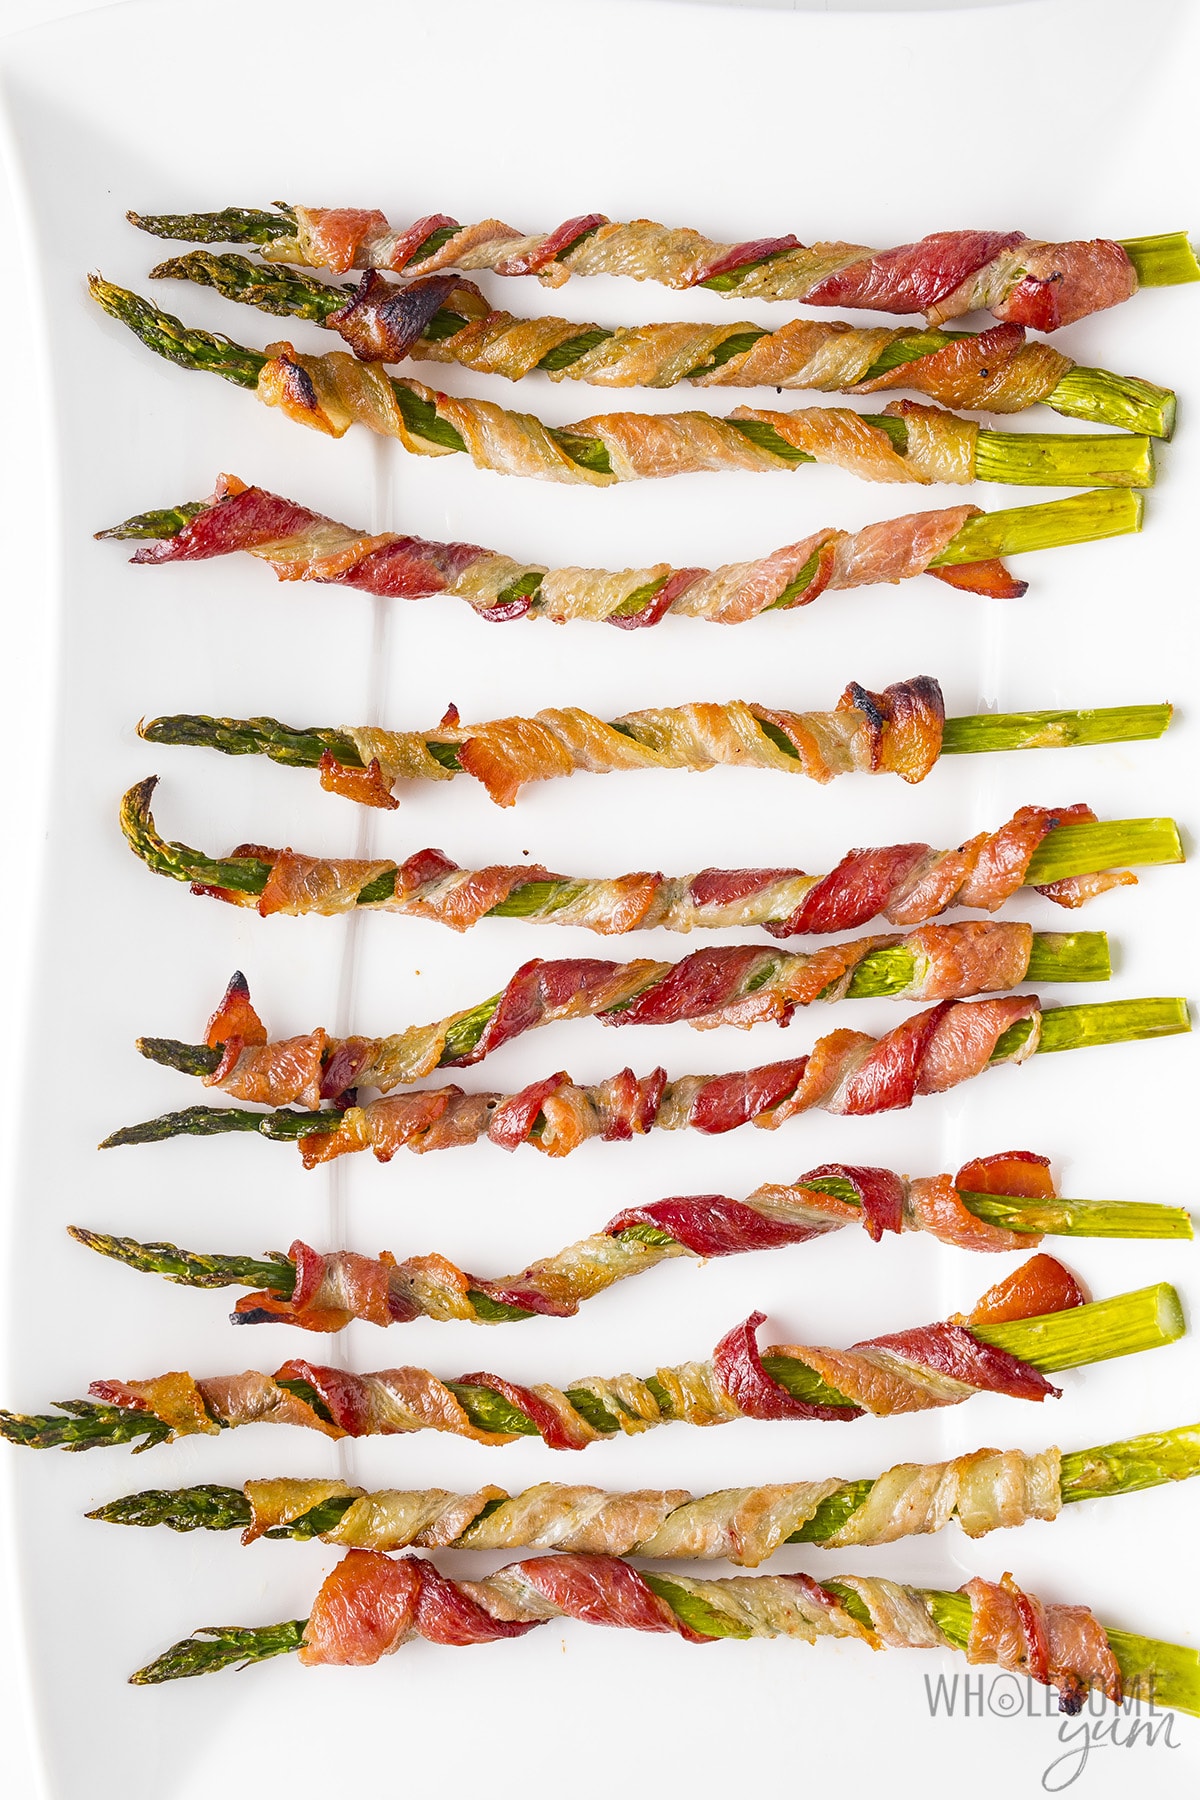 Bacon wraps asparagus on a white plate.